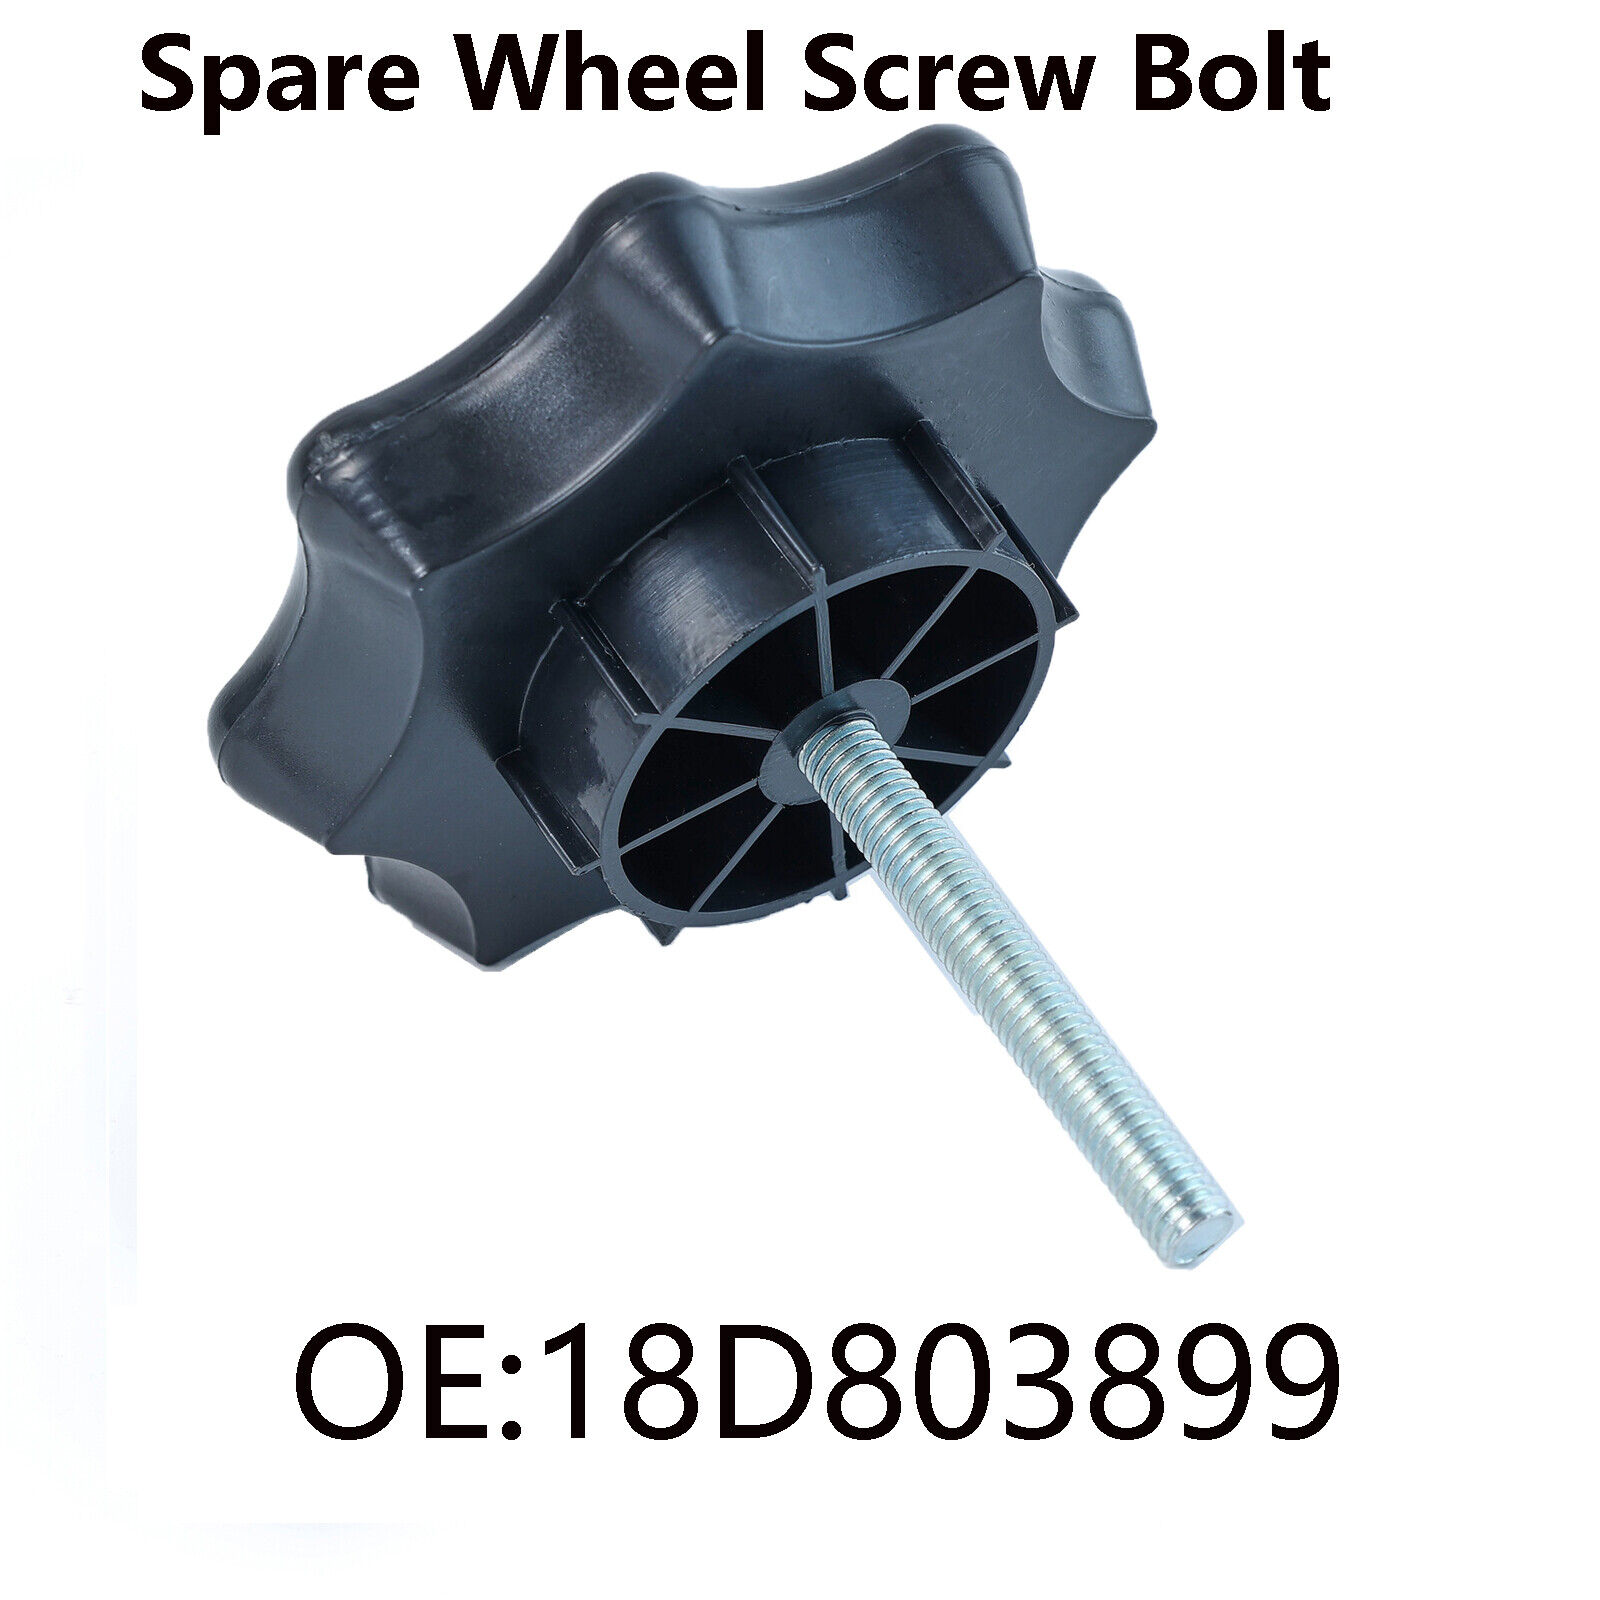 1X For VW Golf MK4 Bora Classic Polo Spare Tire Wheel Mounting Screw 18D803899